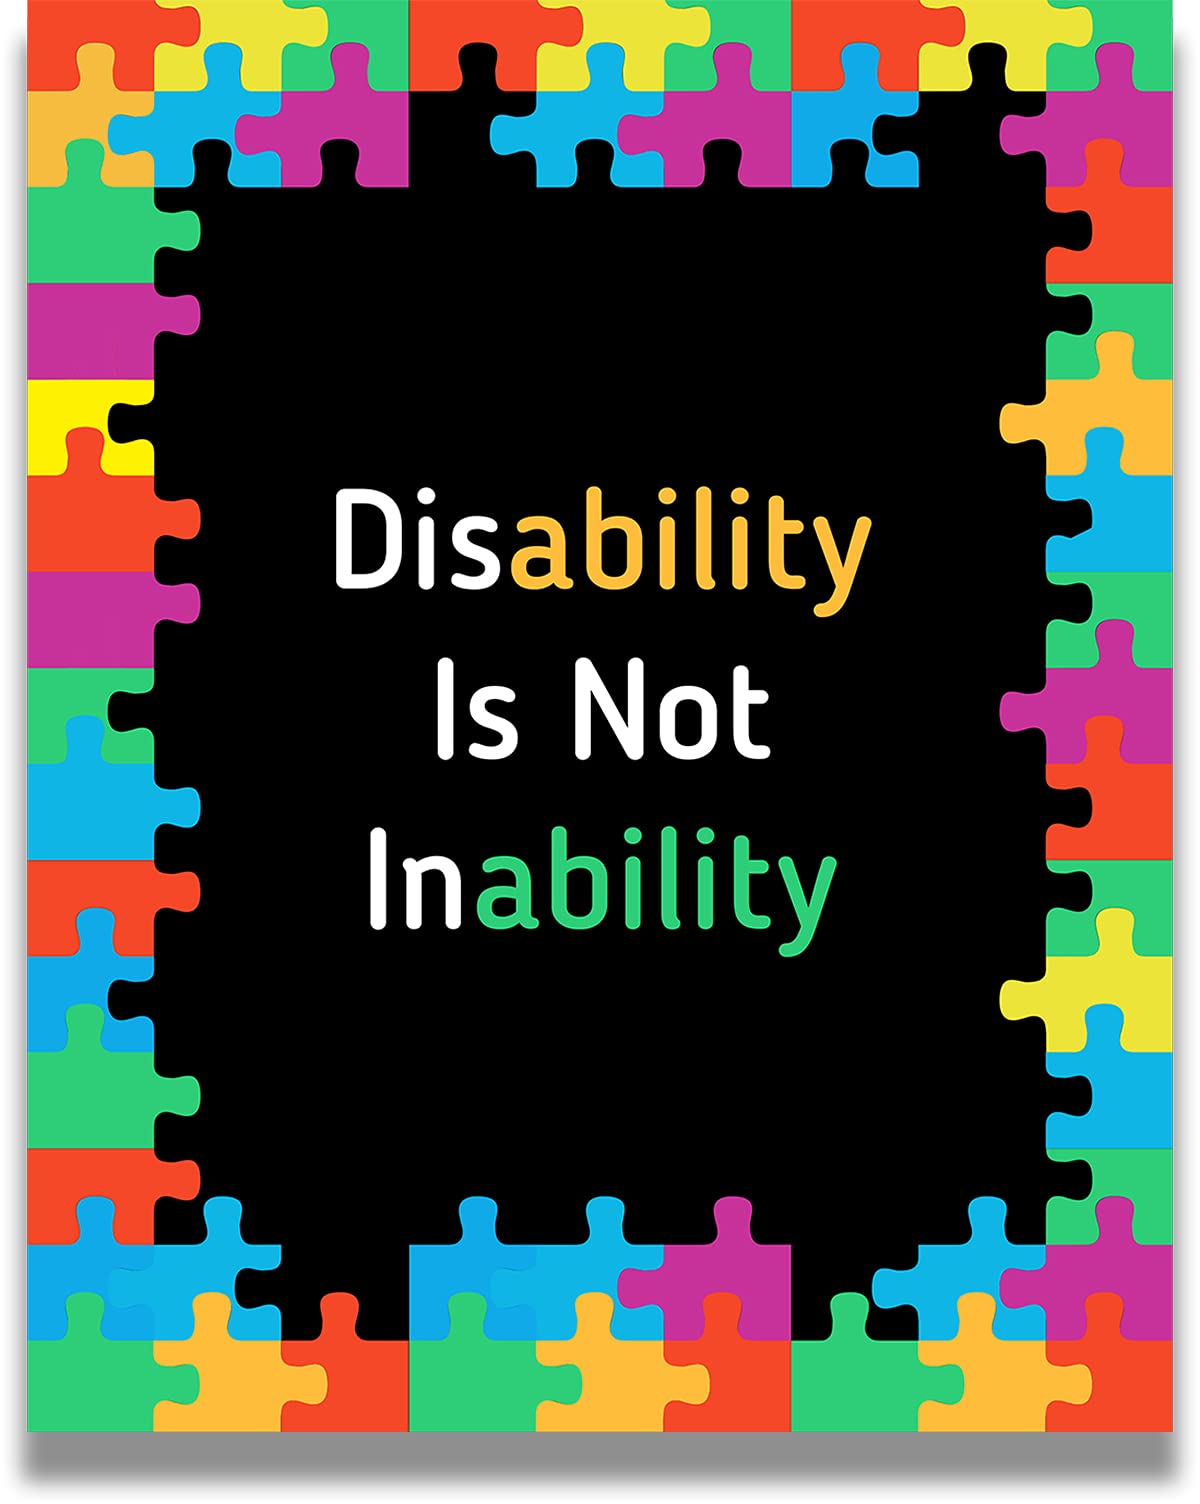 Disability Is Not Inability | Autism Awareness Decor | Autism Classroom | Boho Rainbow Decor Classroom | Autism Sign | Autism Art Wall Decor Classroom | Autistic decorations